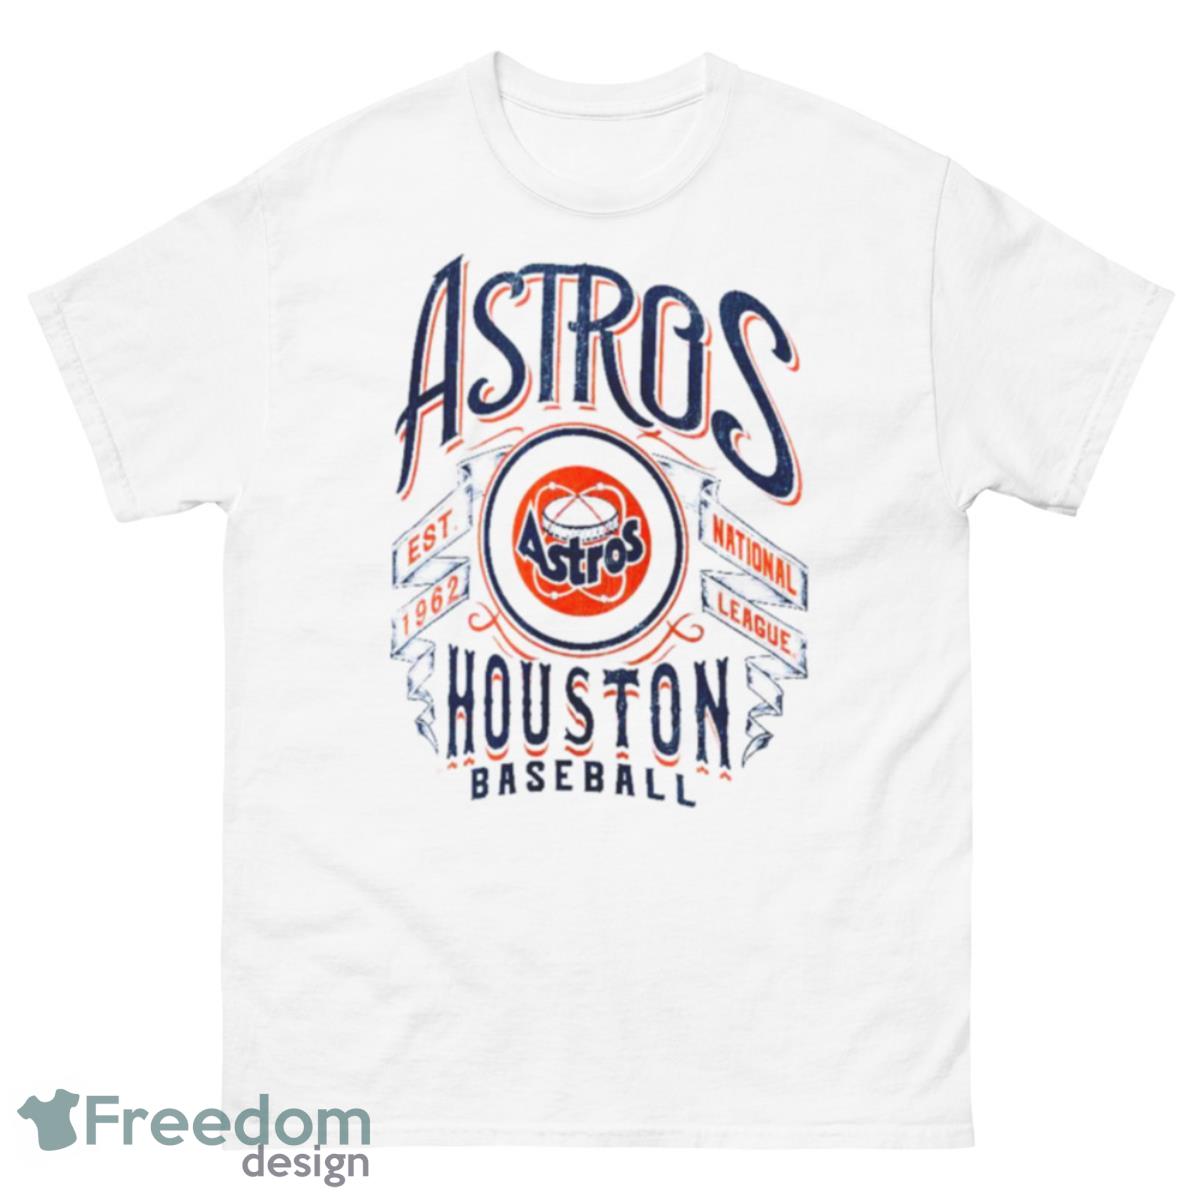 Houston Astros Stitched Baseball Tee Shirt 3T / White